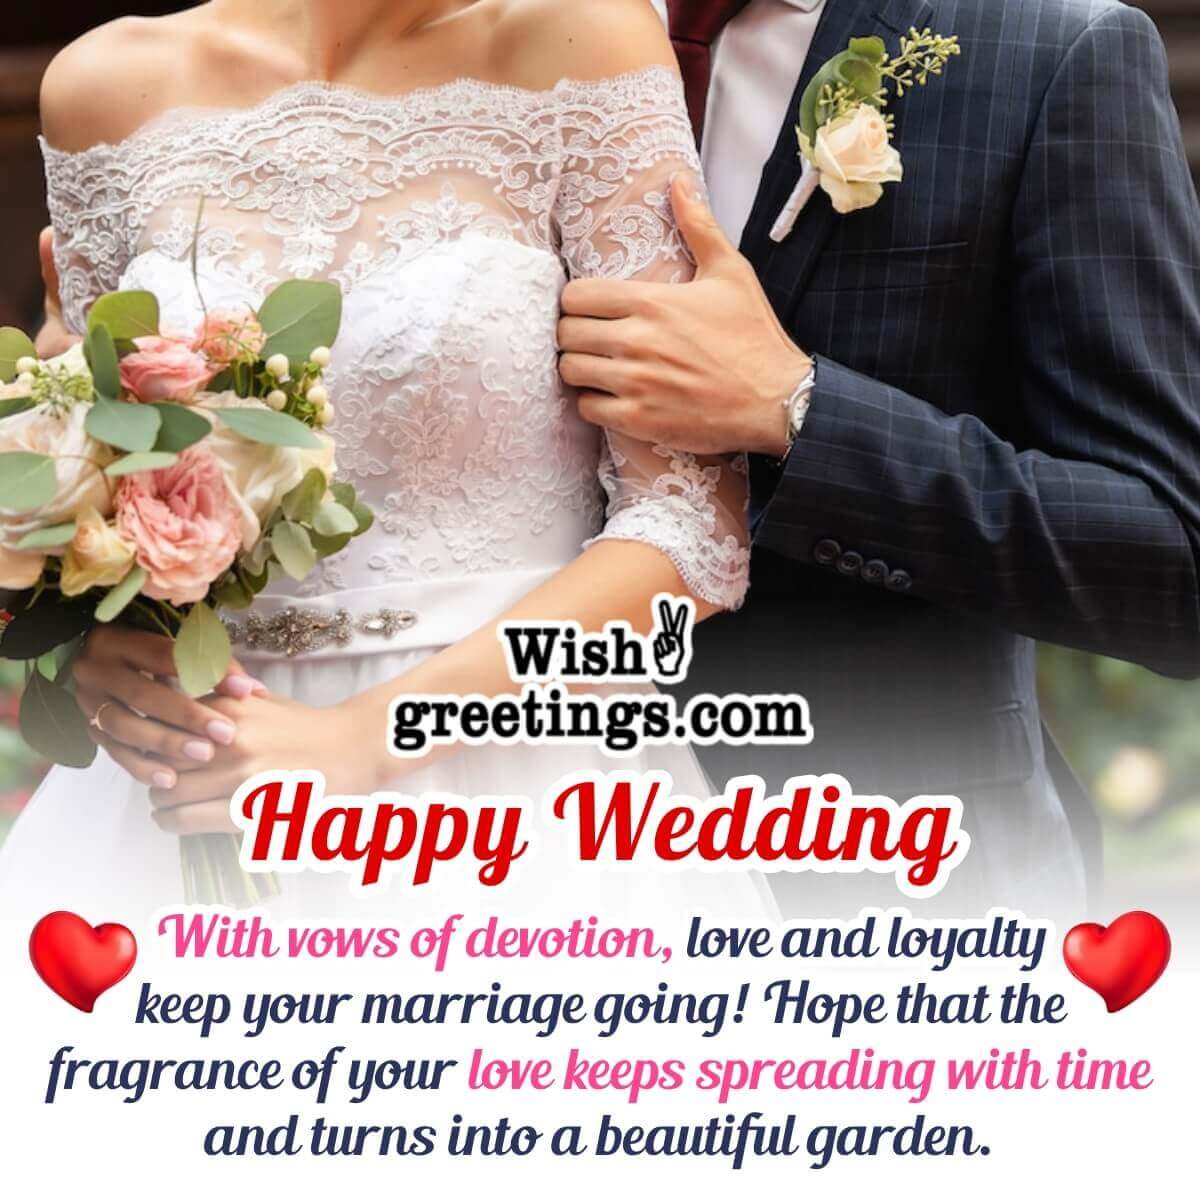 Christian Wedding Wishes - Wish Greetings